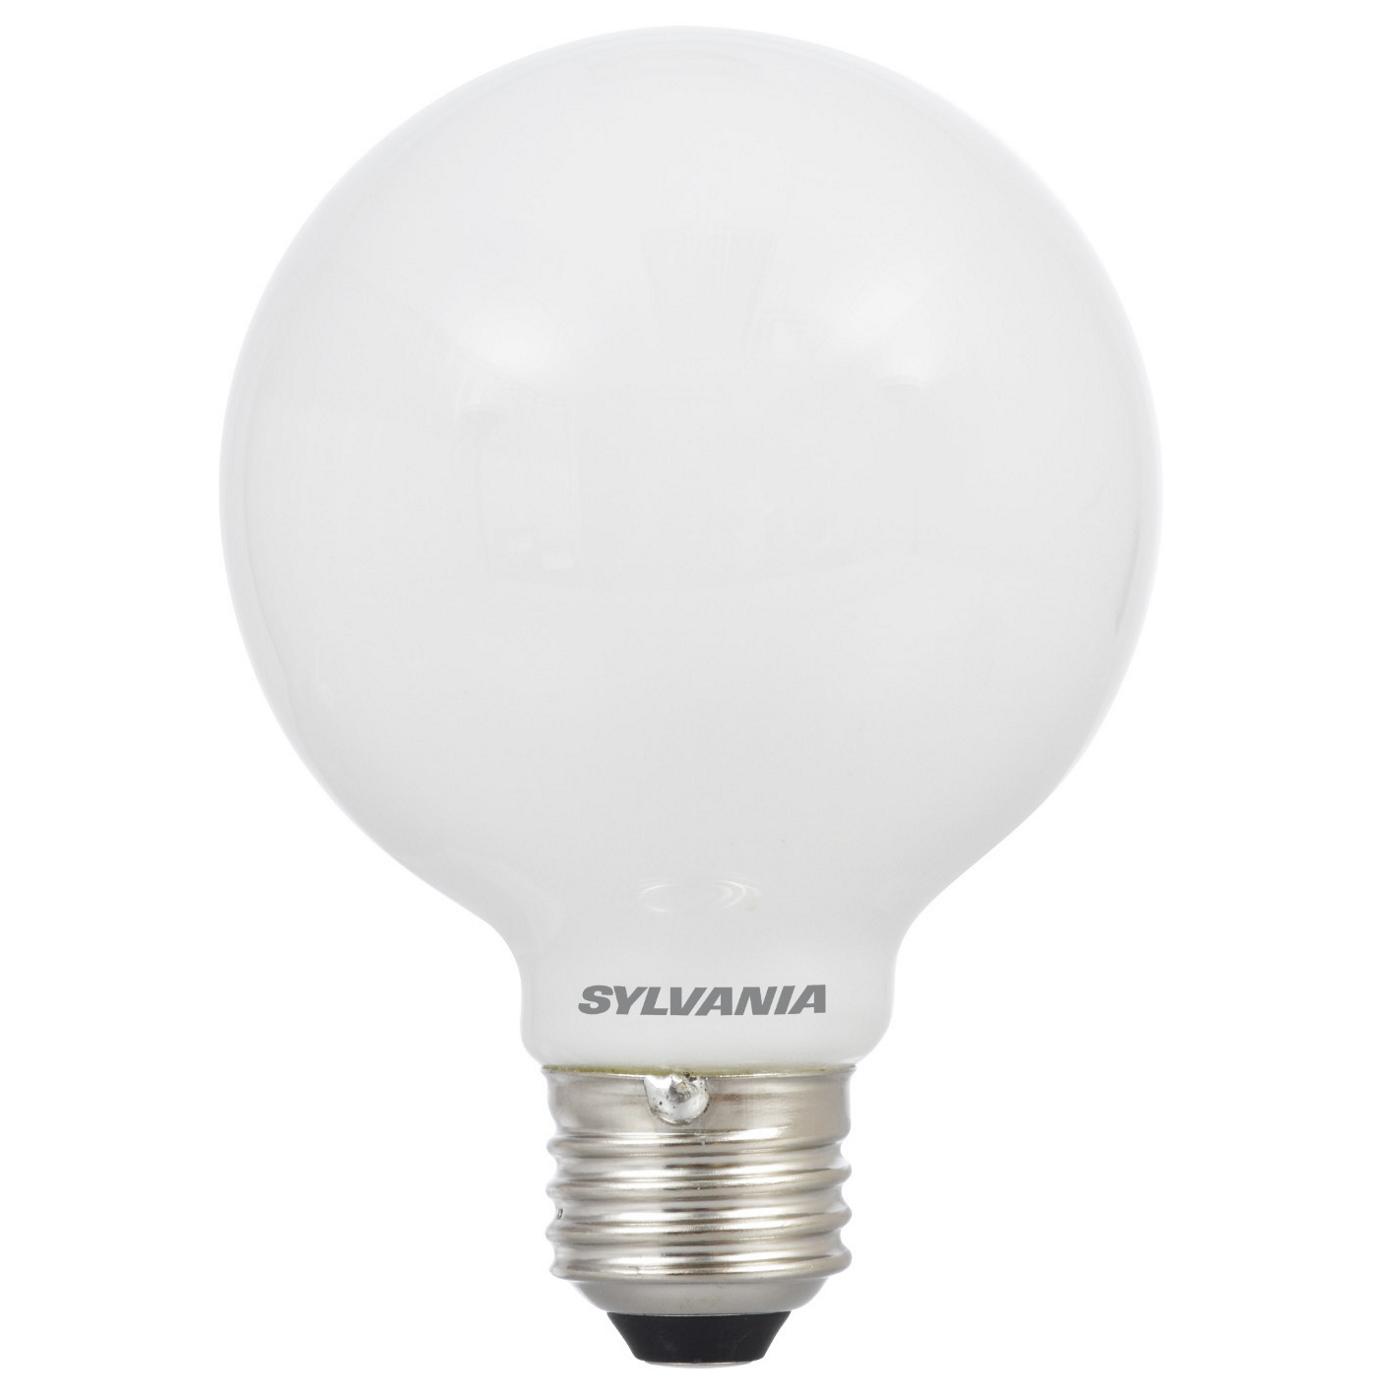 Sylvania ECO G25 40-Watt Frosted LED Light Bulbs - Soft White; image 2 of 2